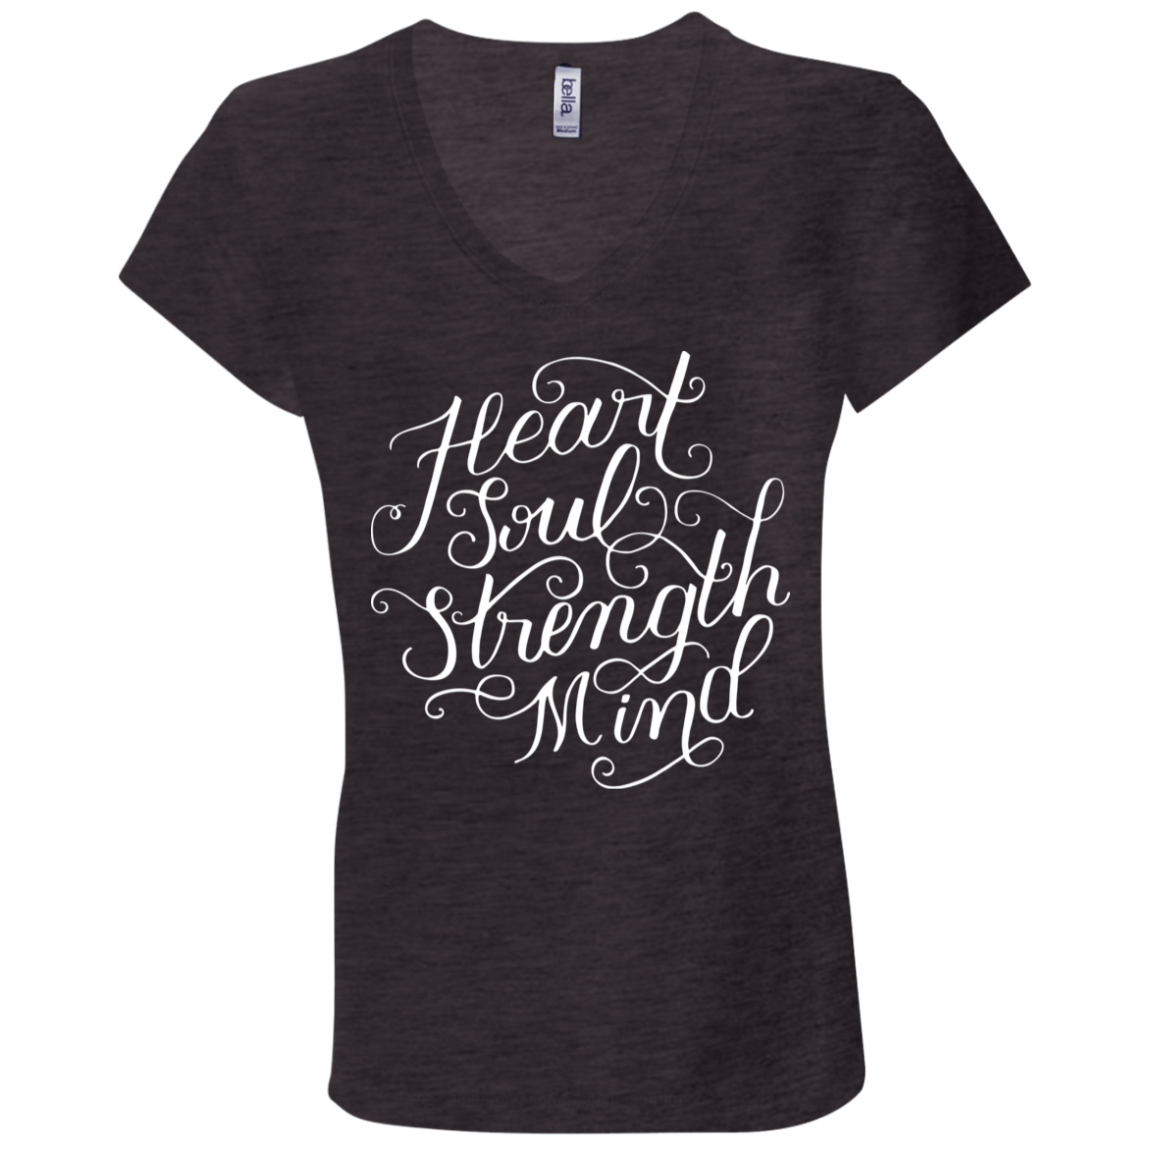 Heart Soul Strength Mind | Ladies’ Performance V-Neck